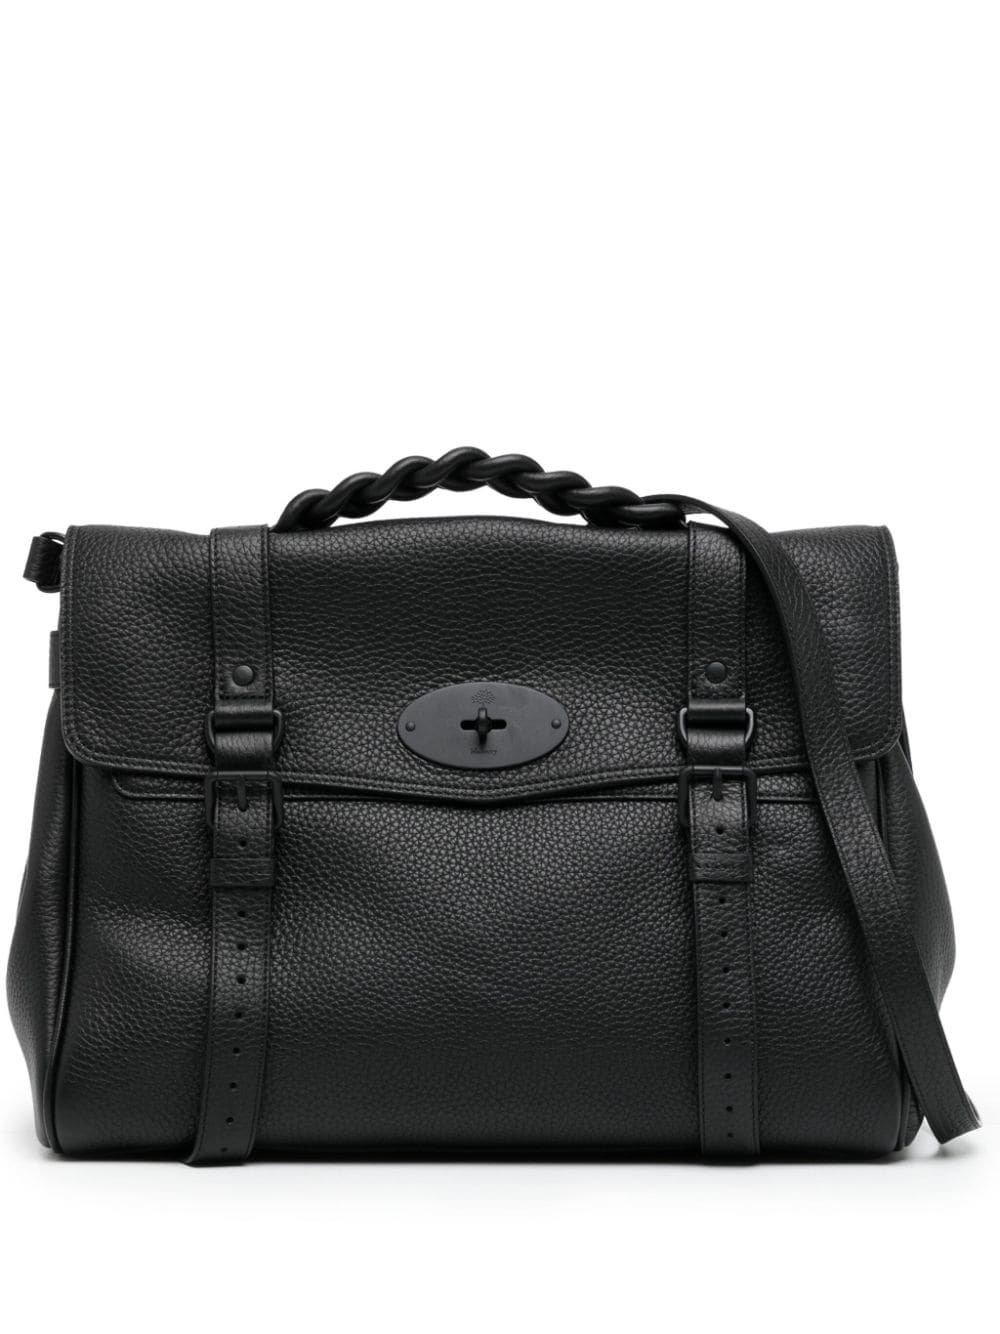 Alexa leather satchel bag - 1